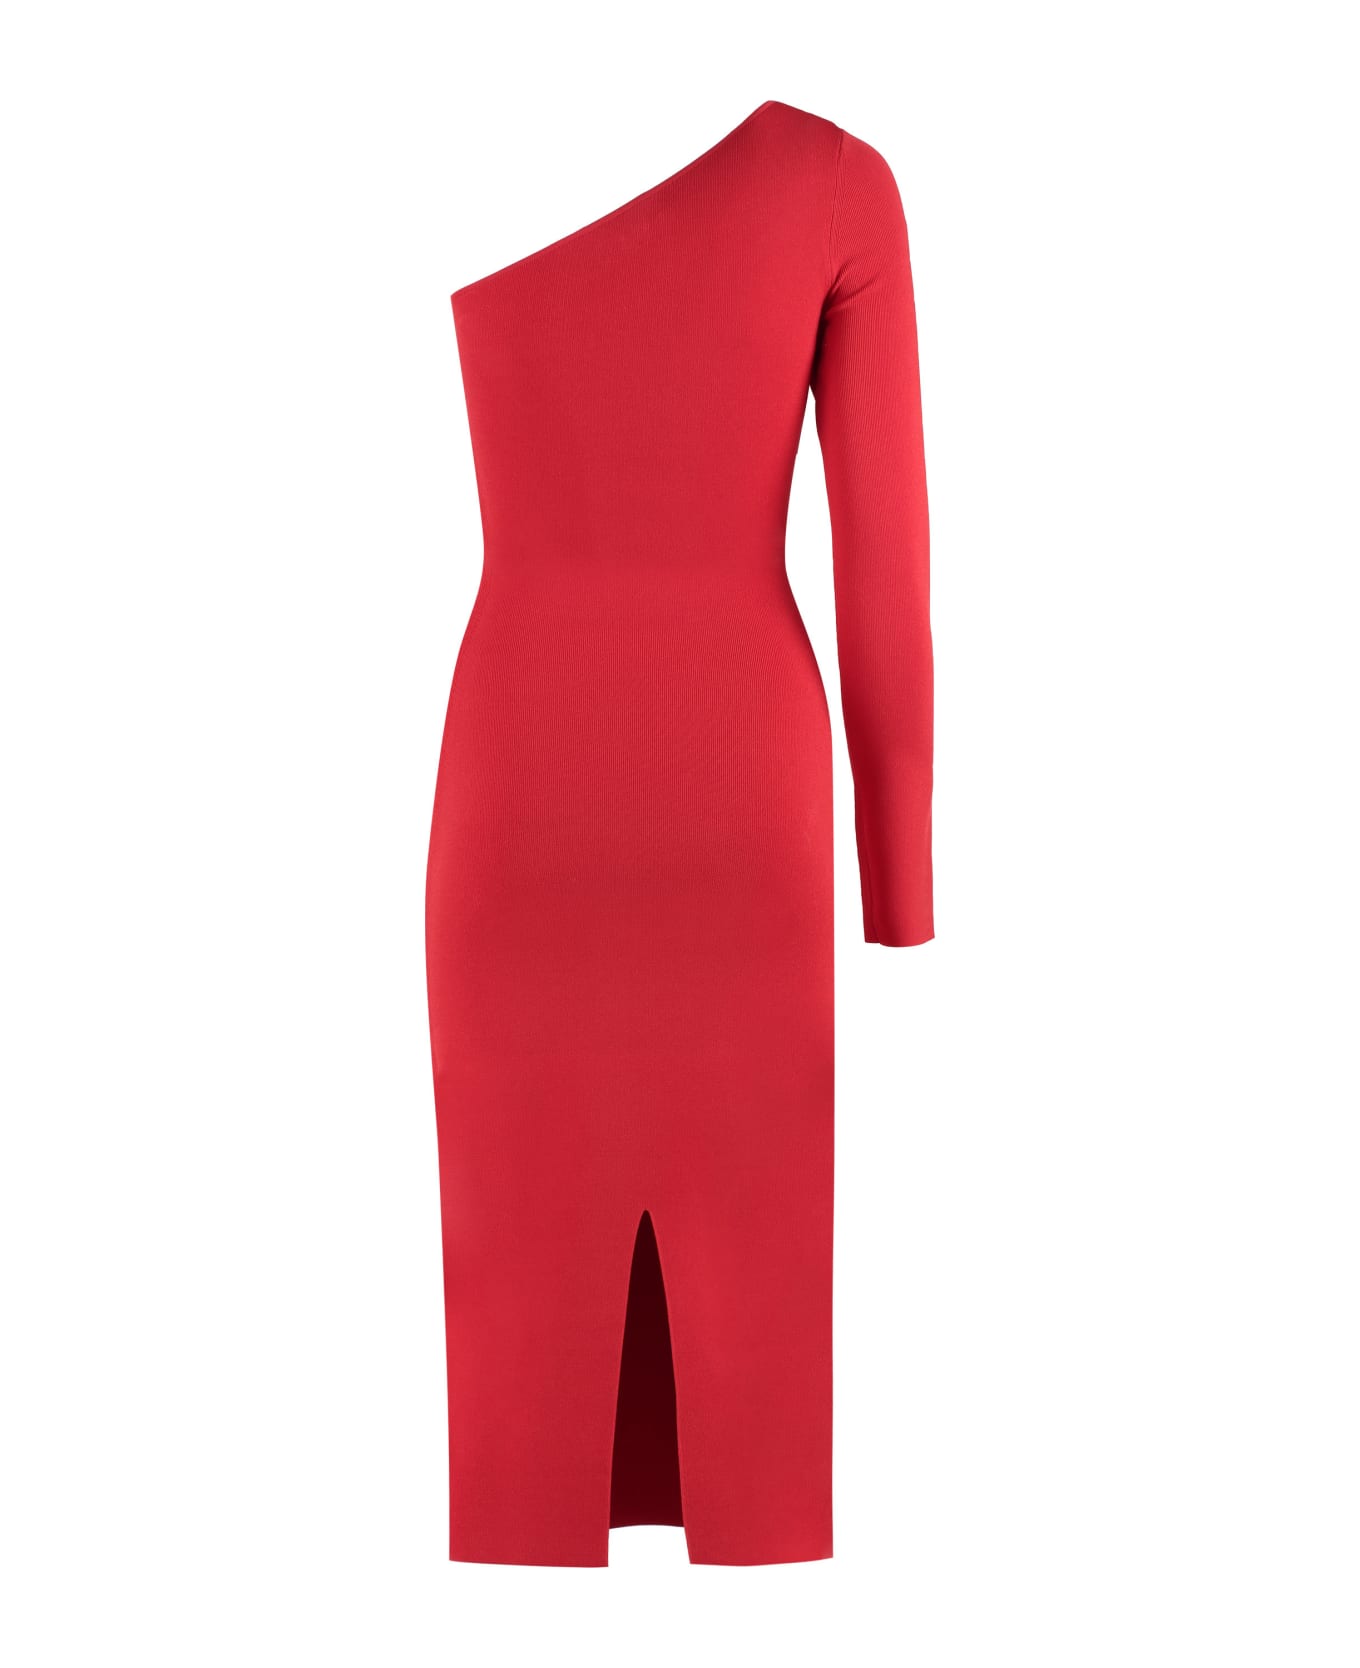 Victoria Beckham Stretch Sheath Dress - red